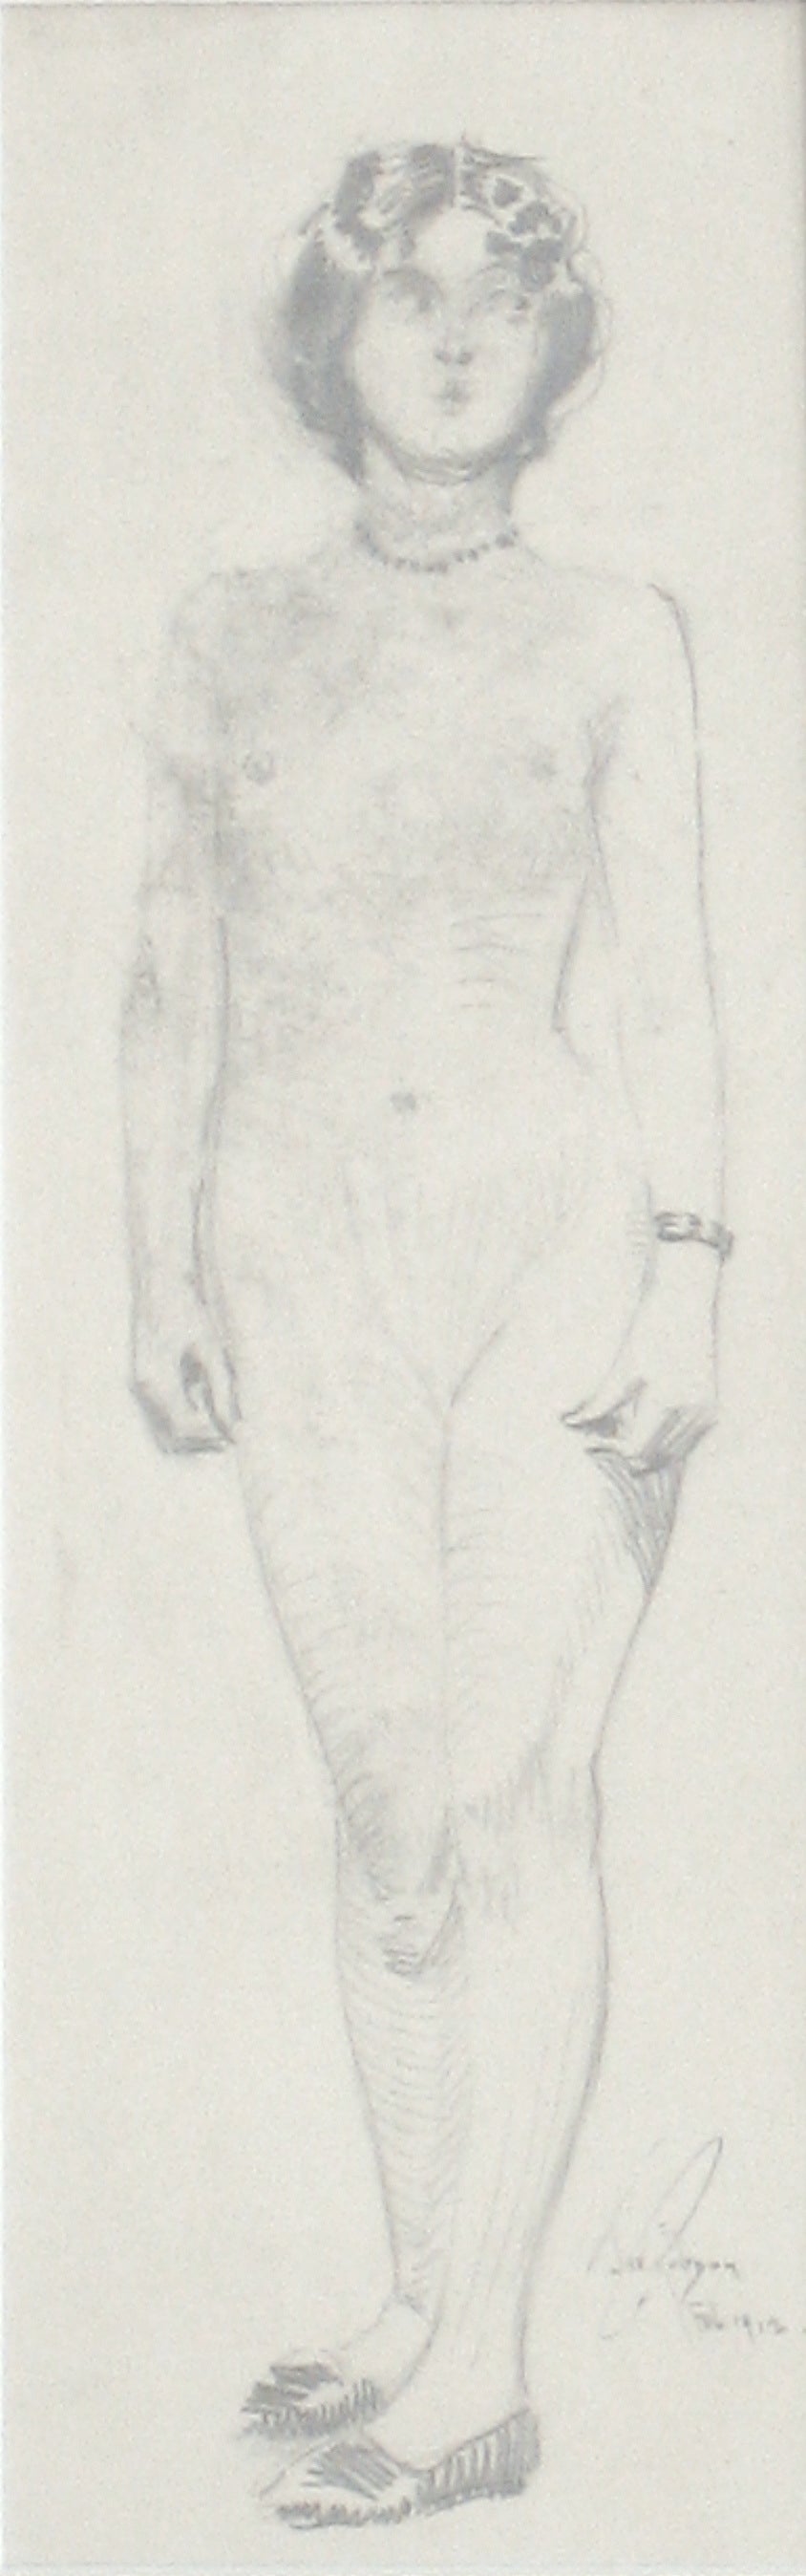 Standing Nude, Paris&lt;br&gt;Graphite, 1912&lt;br&gt;&lt;br&gt;#0119